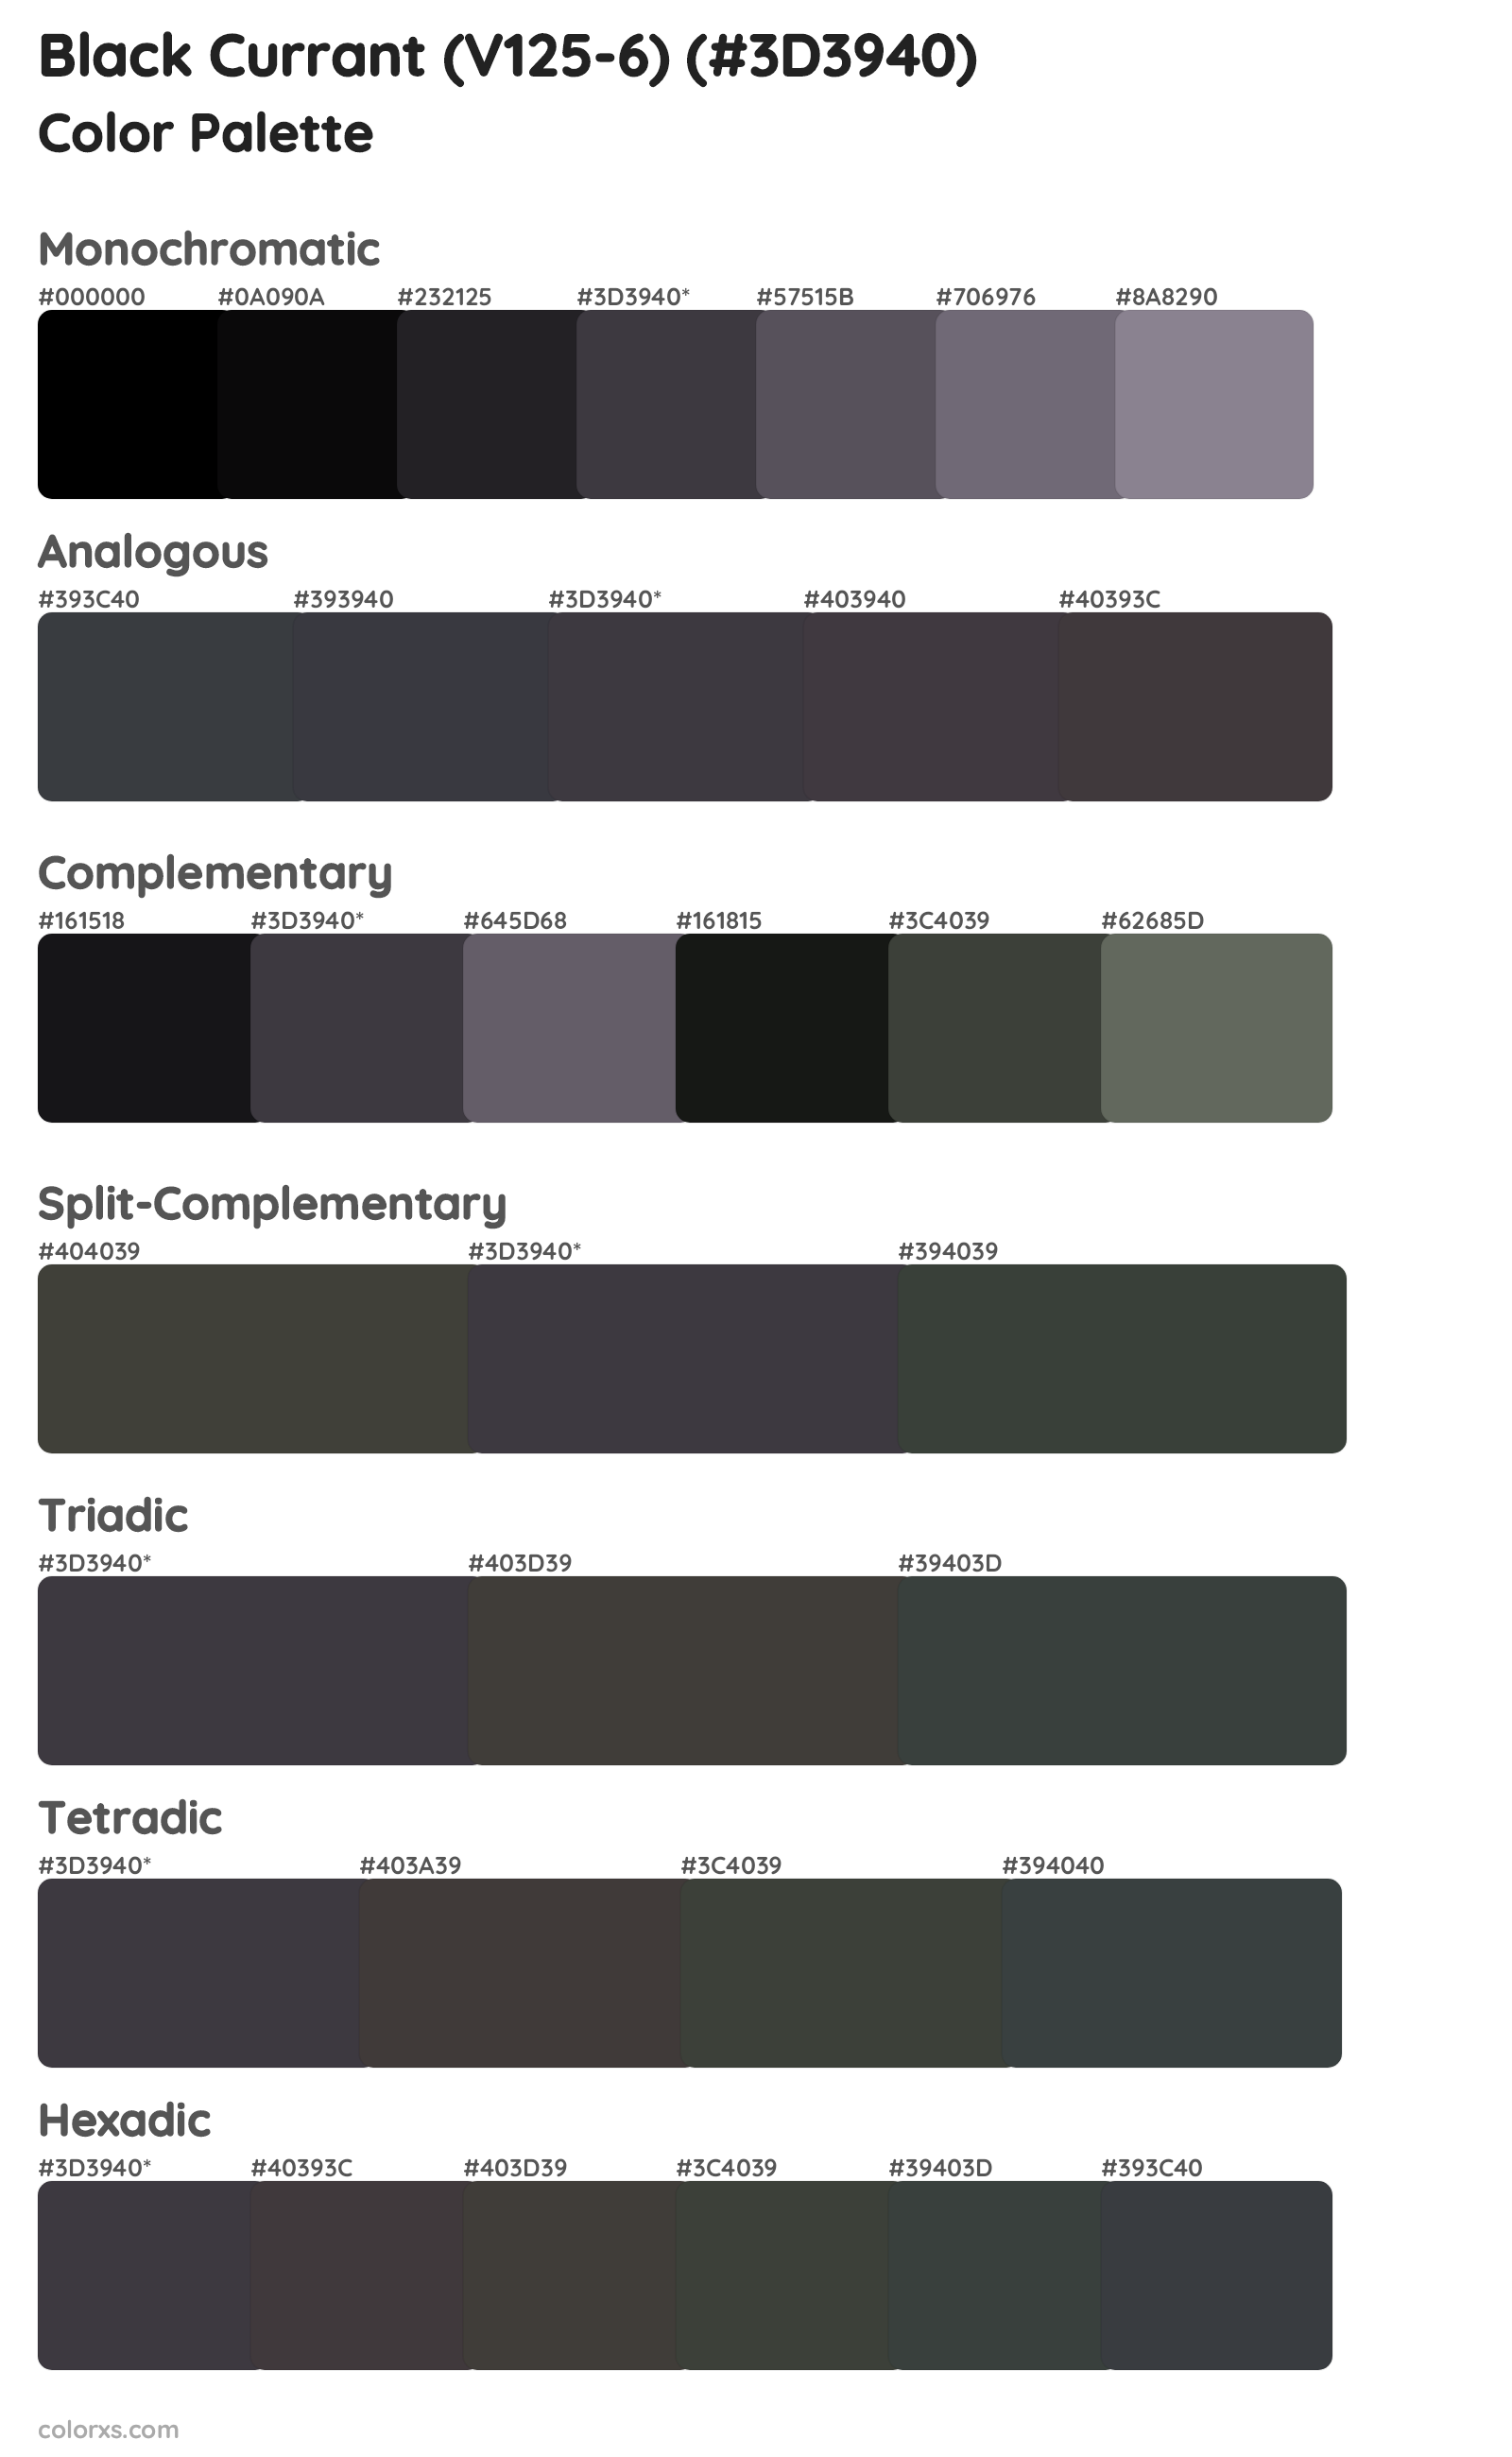 Black Currant (V125-6) Color Scheme Palettes